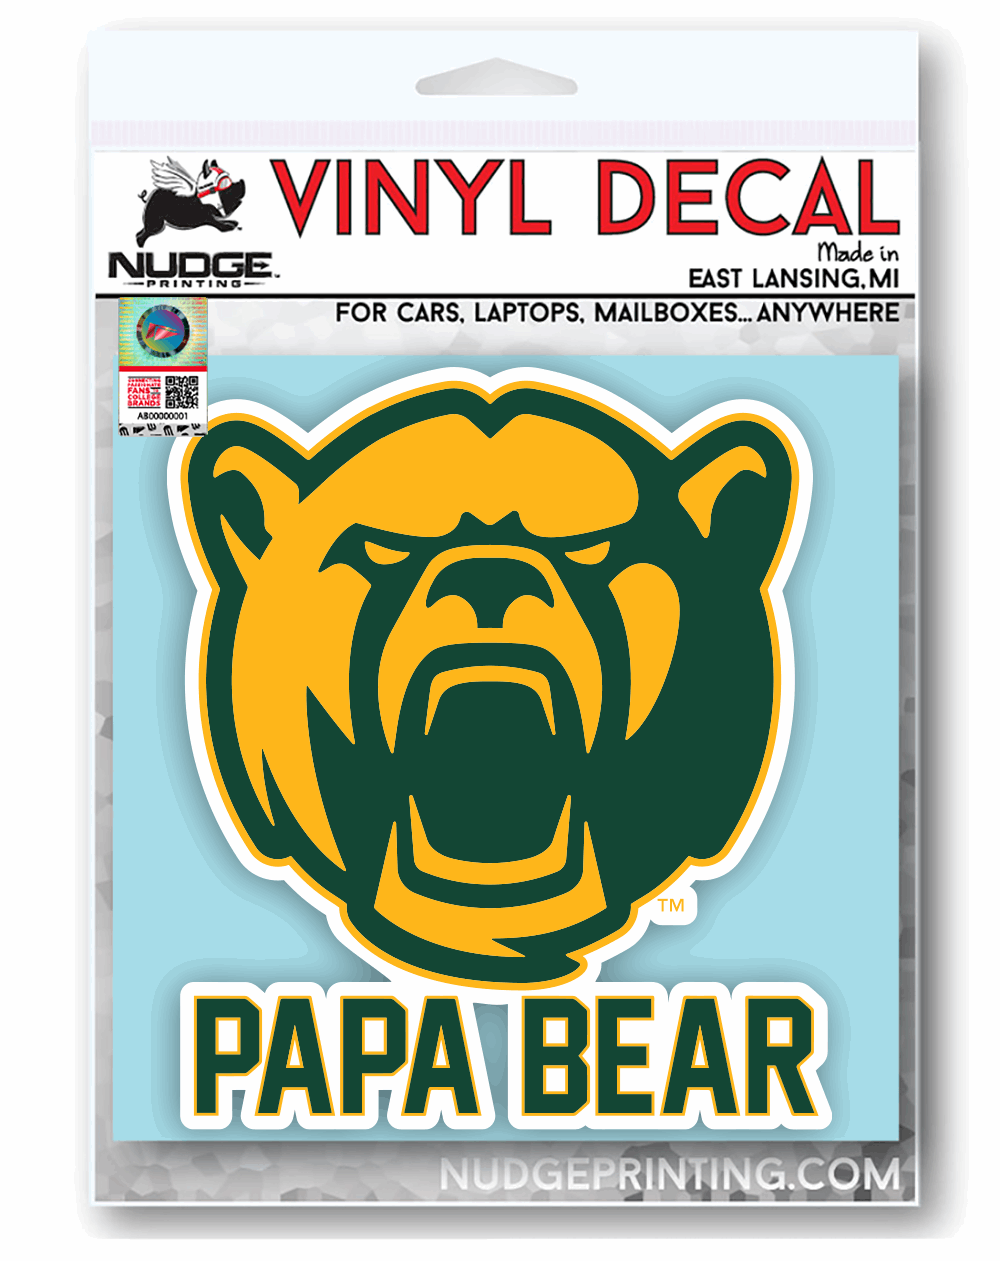 Green and Gold Baylor Bears Papa Bear Bear Head logo decal in packaging